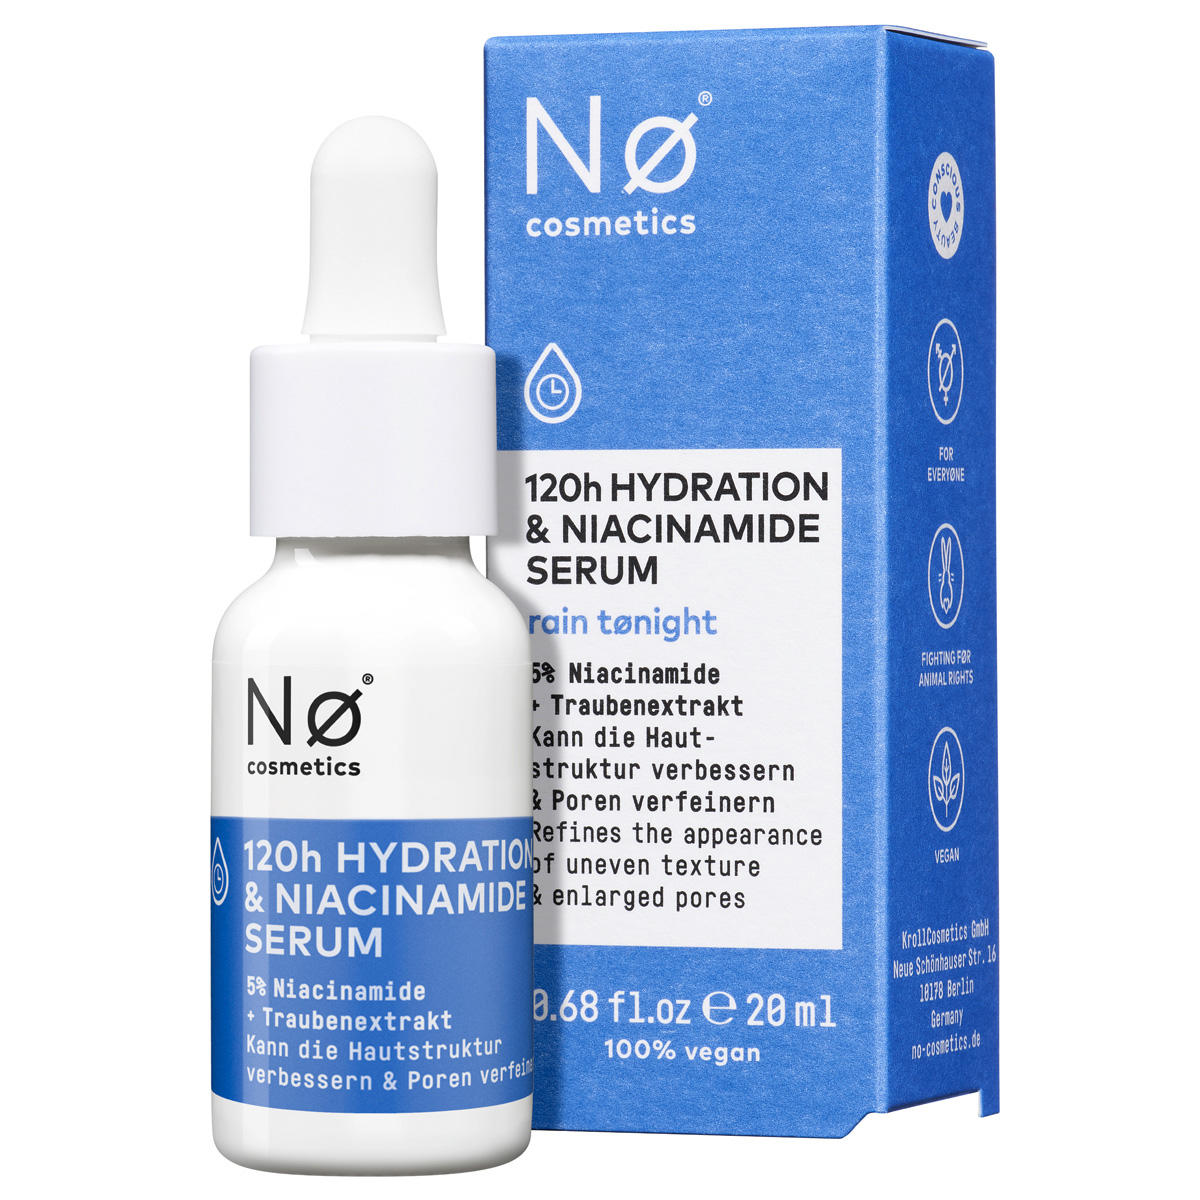 Nø Cosmetics rain tønight 120h Hydration & Niacinamide Serum 20 ml - 1